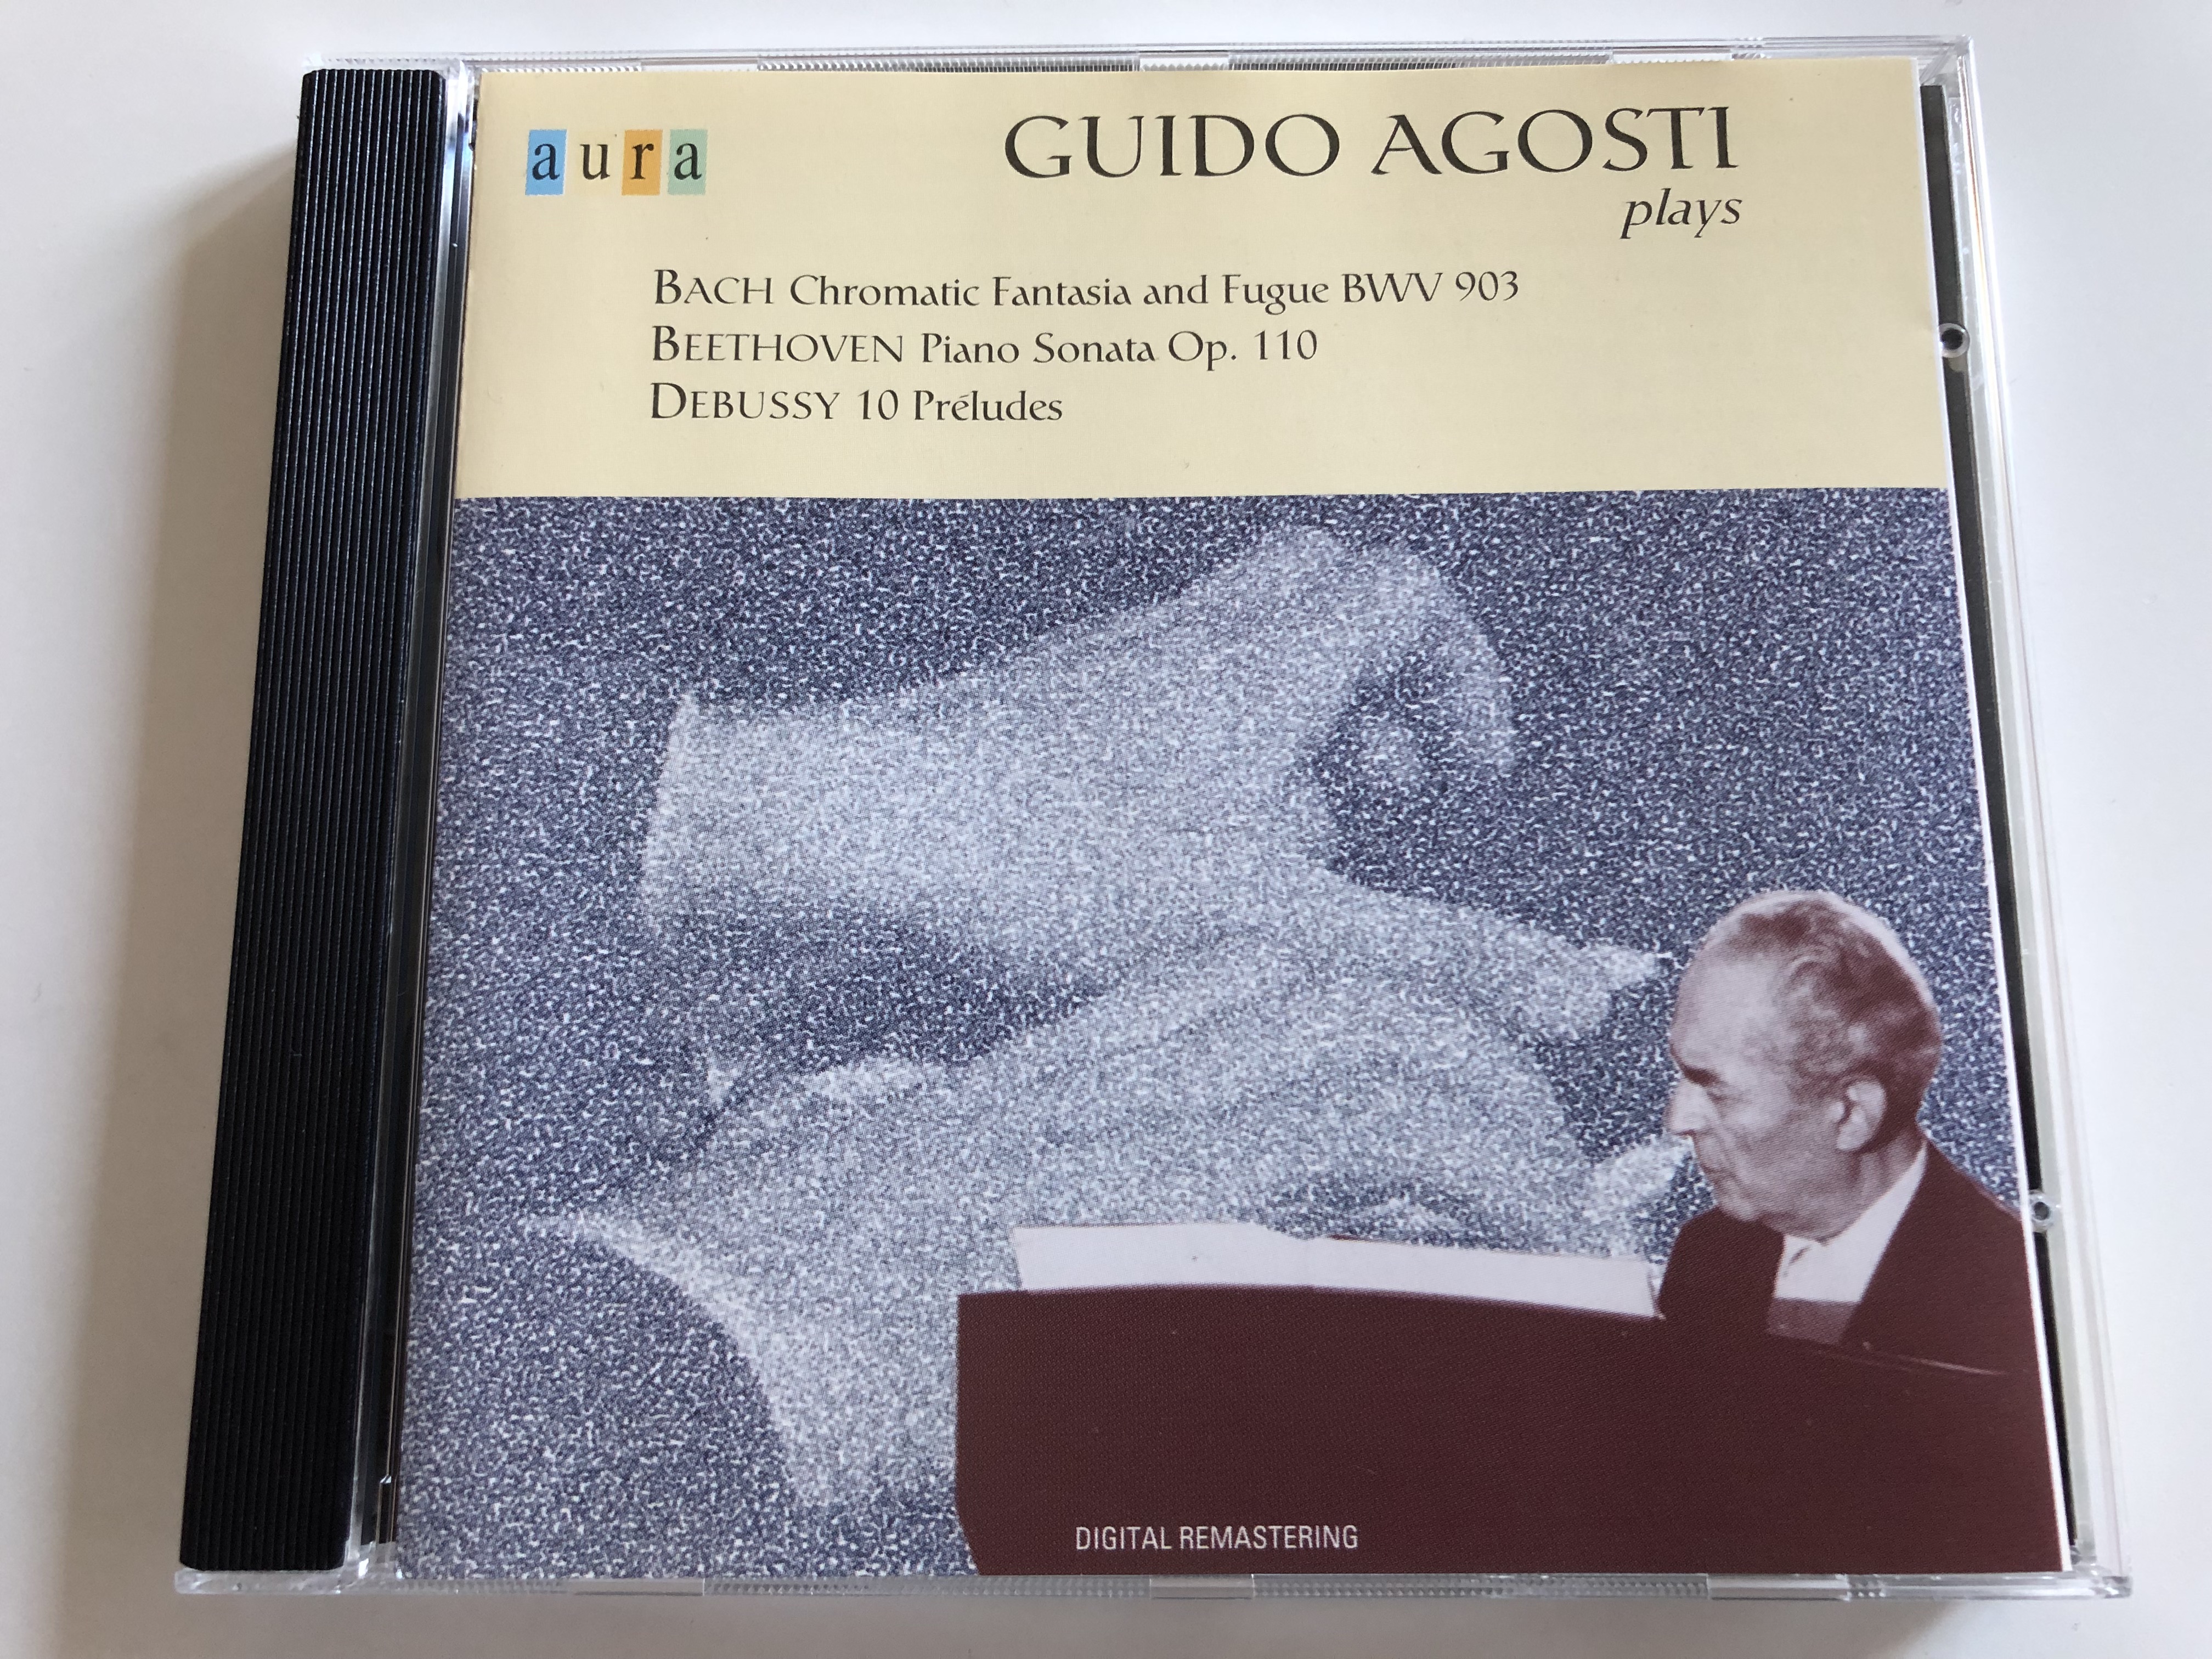 guido-agosti-plays-bach-chromatic-fantasia-and-fugue-bwv-903-beethoven-piano-sonata-op.-110-debussy-10-preludes-aura-music-audio-cd-1998-aur-205-2-1-.jpg